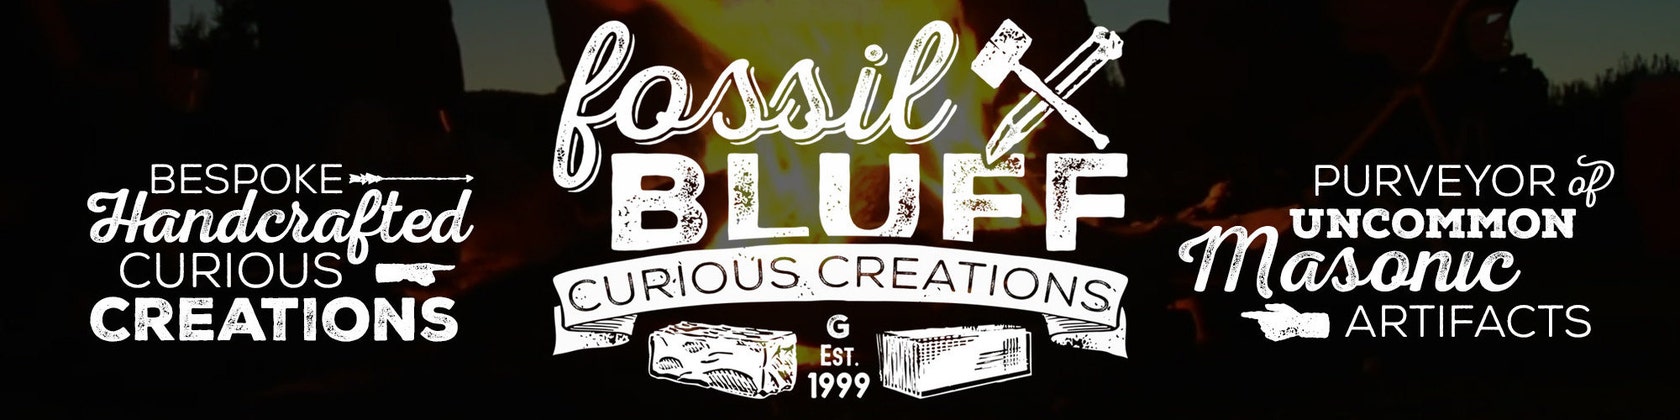 Masonic Blue Ribbon Christmas Ornament - Fossil Bluff